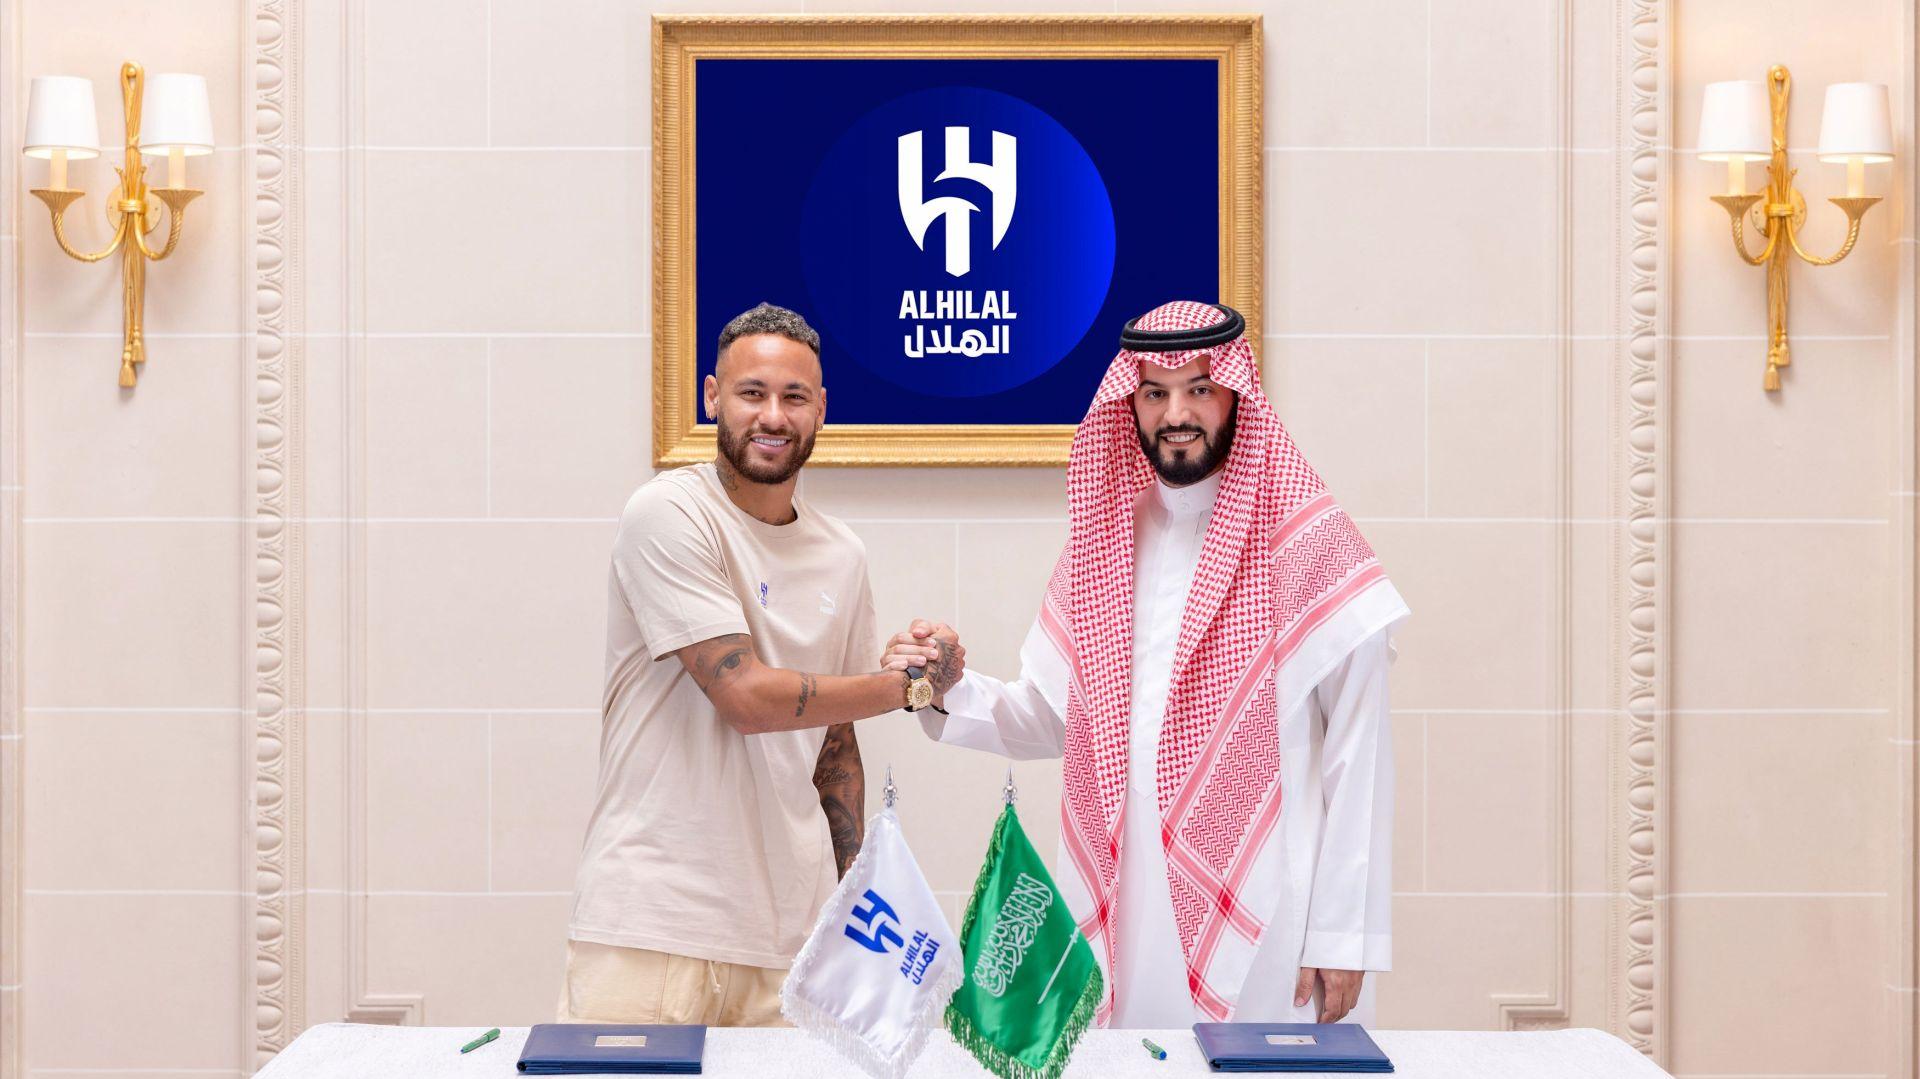 Brazils Neymar signs for Saudi football club Al Hilal Football